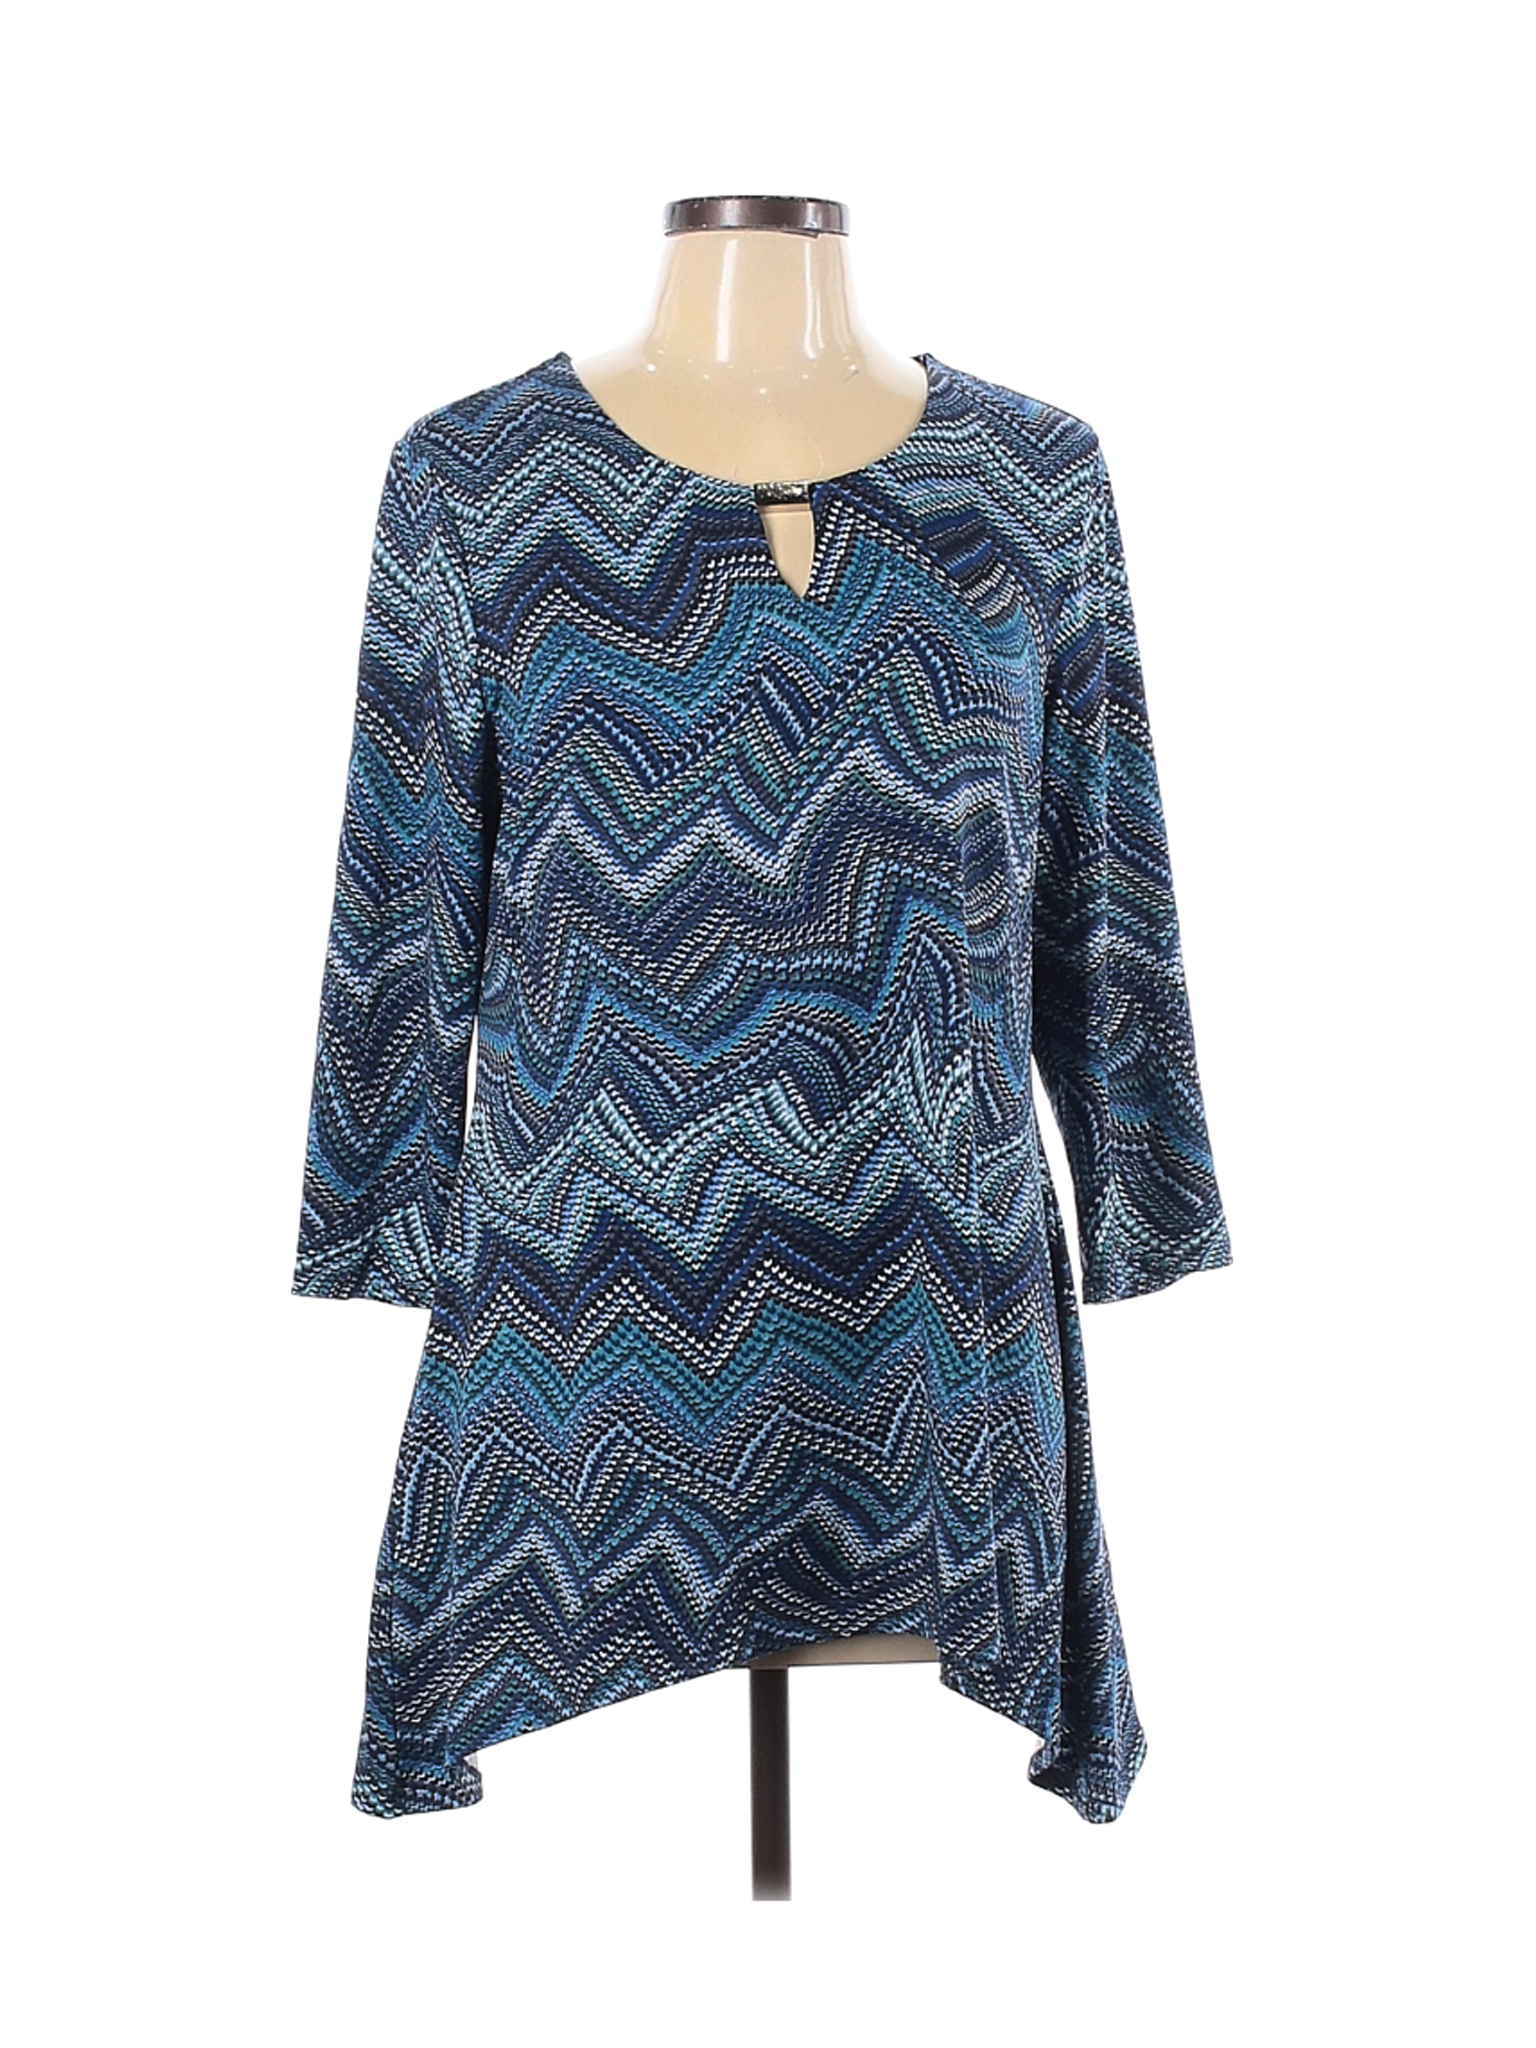 Cocomo Women Blue 3/4 Sleeve T-Shirt L | eBay